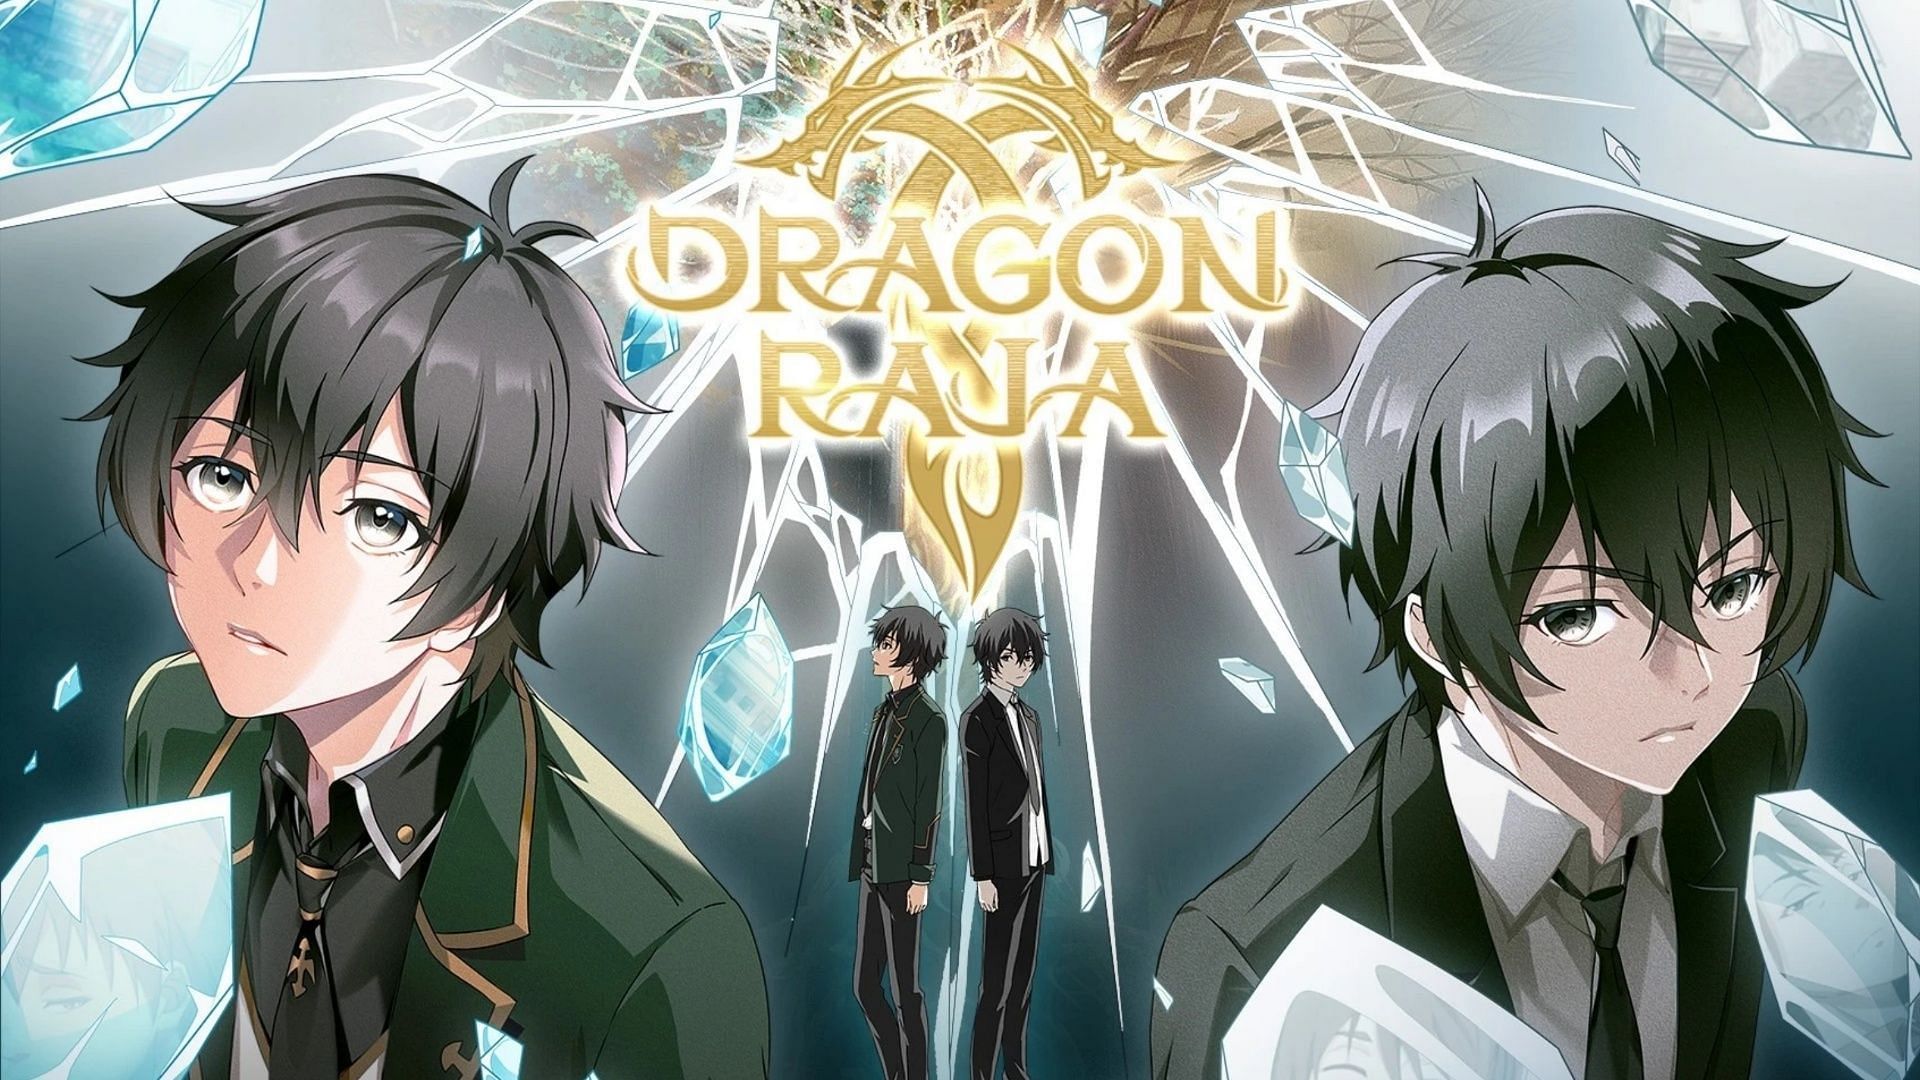 Assistir Dragon Raja Todos os Episódios Online - Animes BR